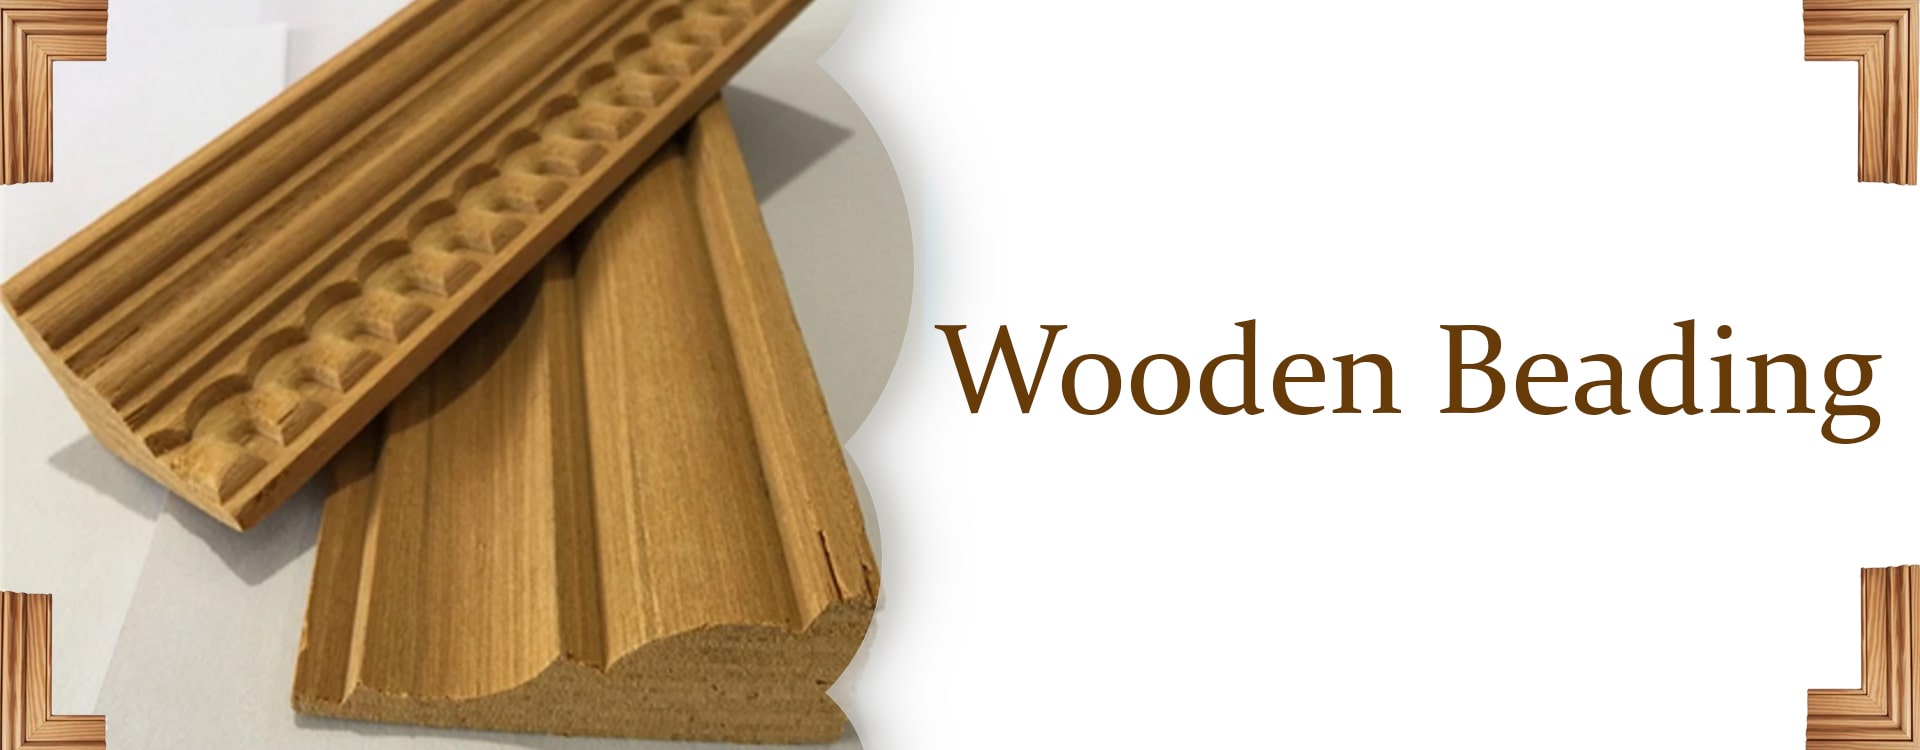 Wooden Beading